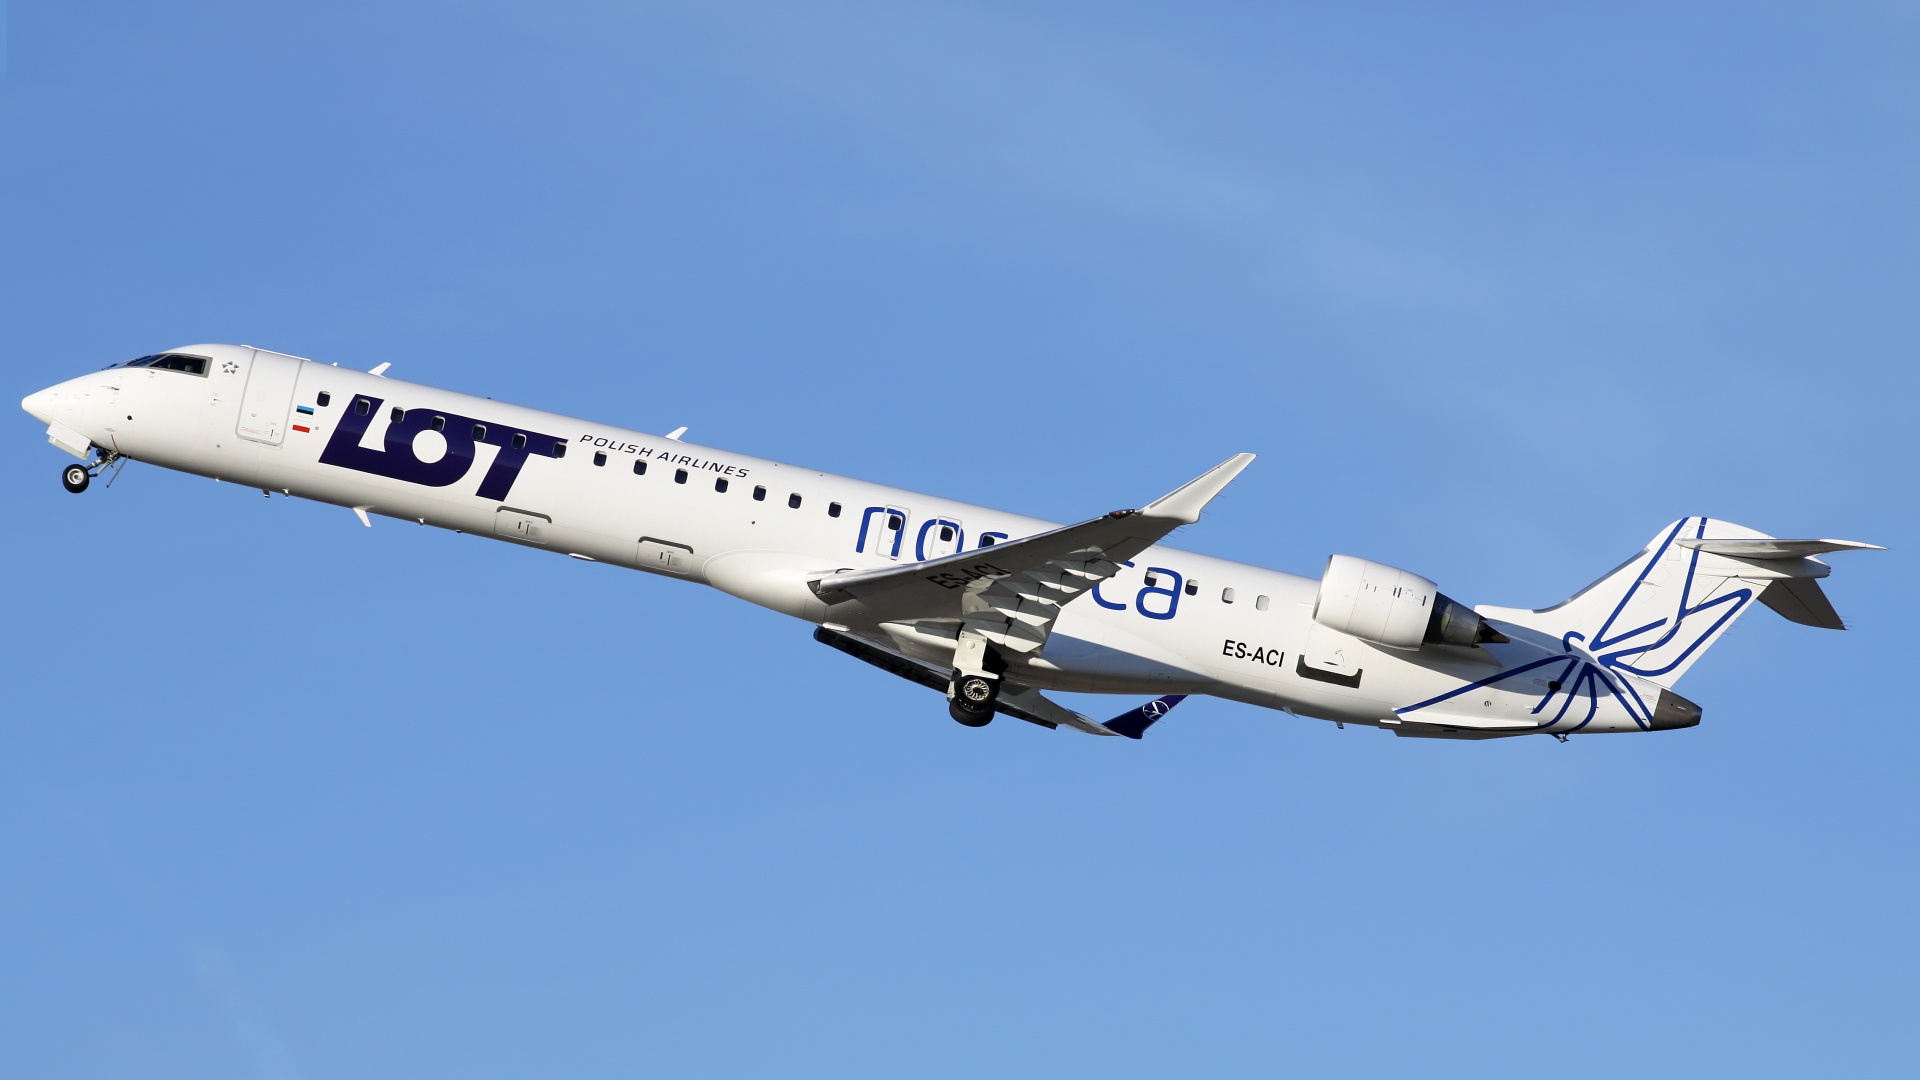 ES-ACI (LOT Polish Airlines - Nordica hybrid livery) (Aircraft » EPWA Spotting » Mitsubishi Regional Jet » CRJ-900 » Nordica)